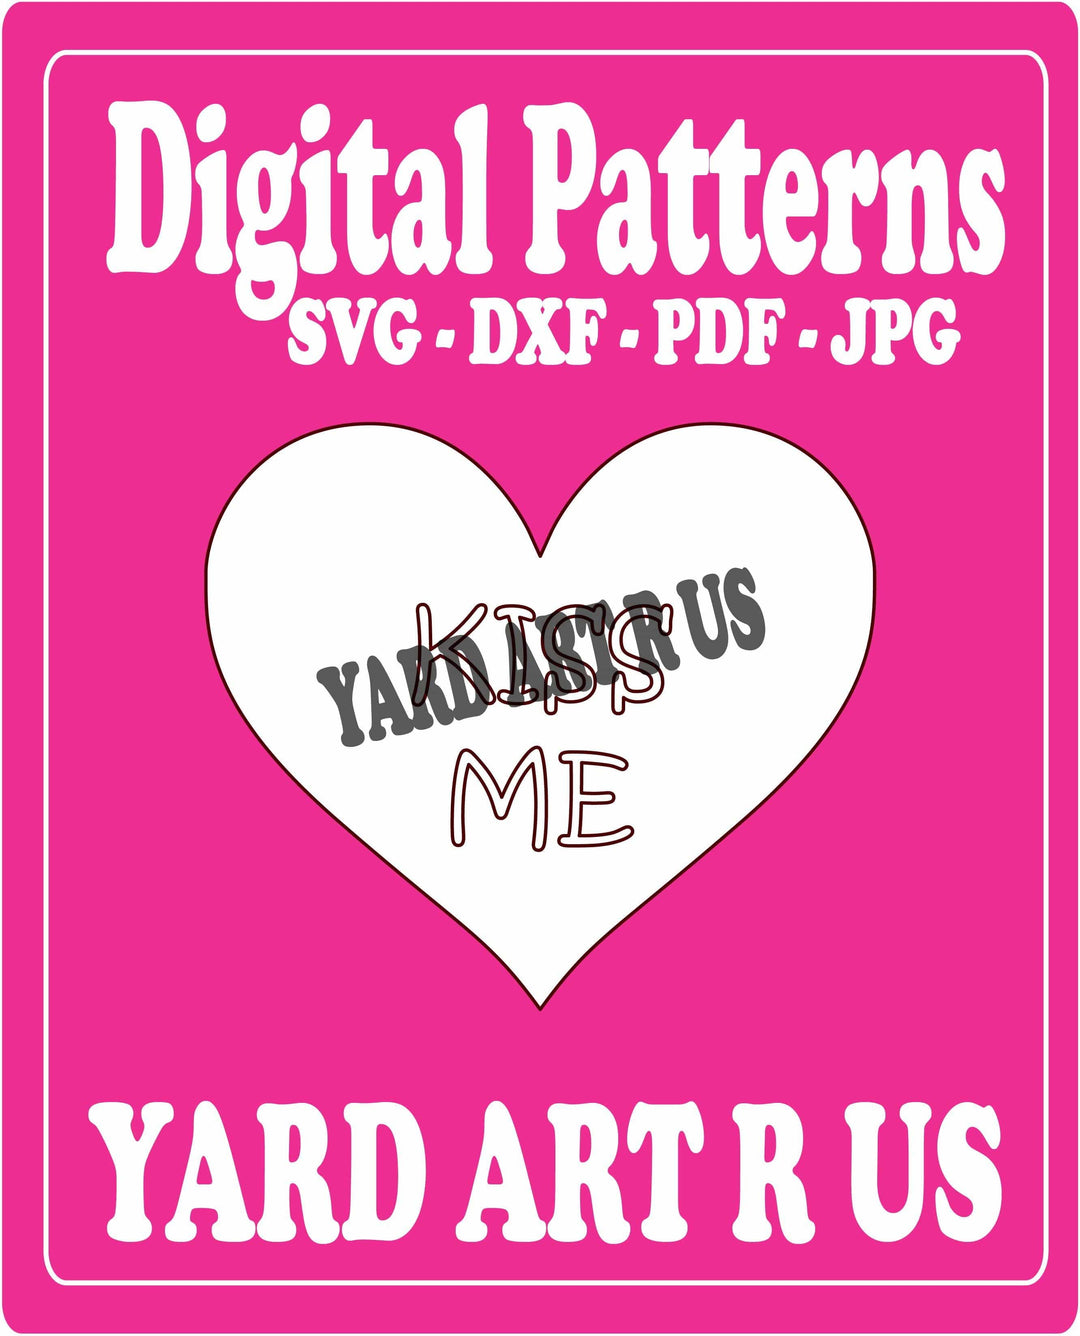 Kiss Me heart digital pattern; SVG, DXF, PDF, and JPG file options